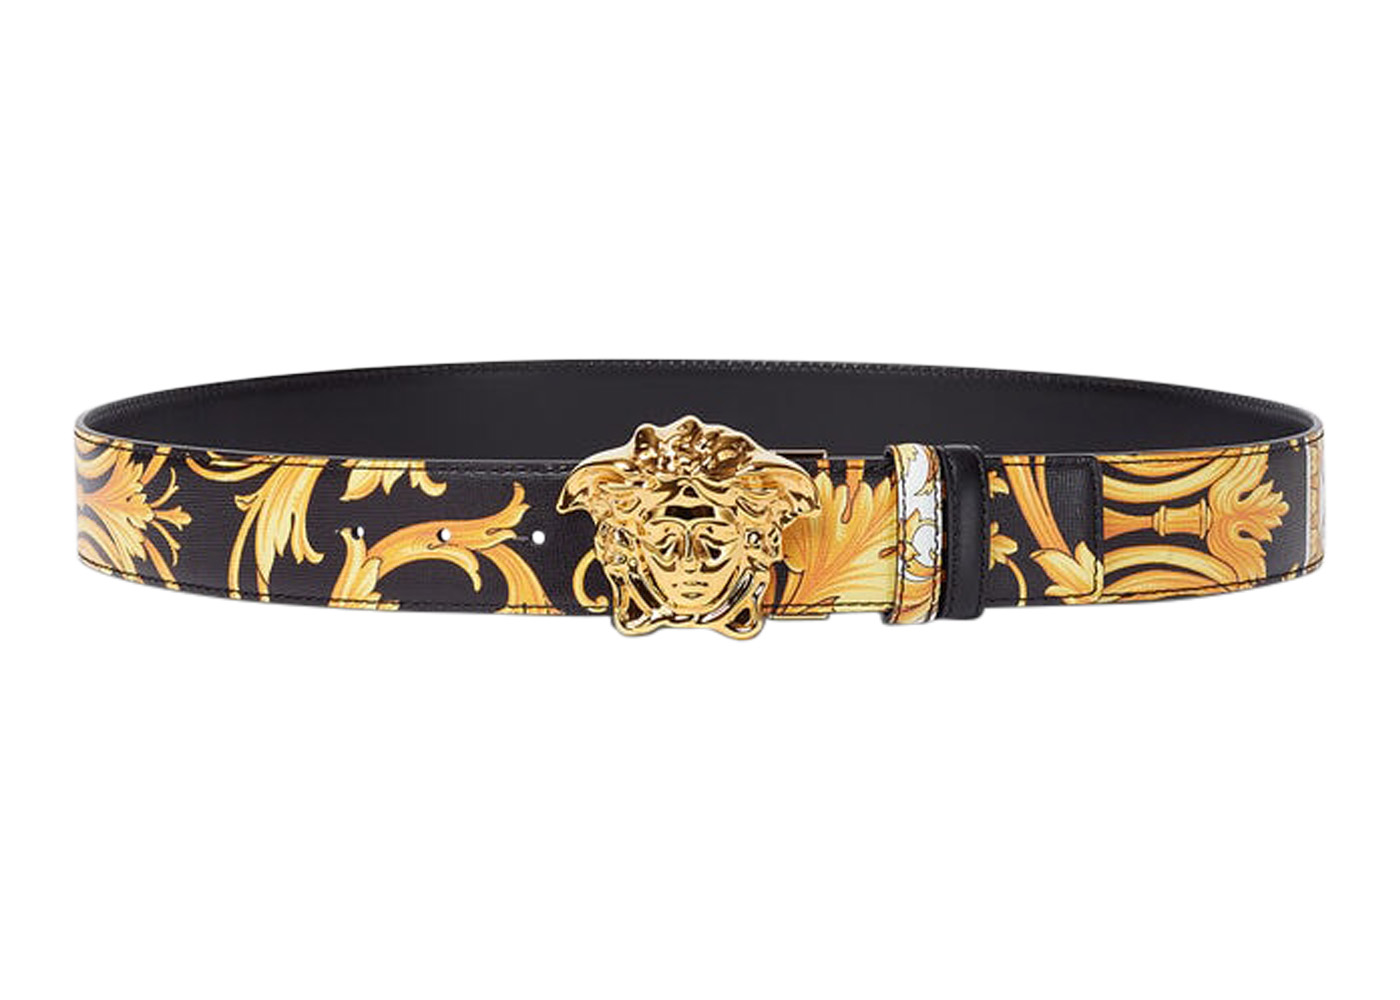 Versace Barocco Reversible Leather Belt Black/Yellow/Gold-tone